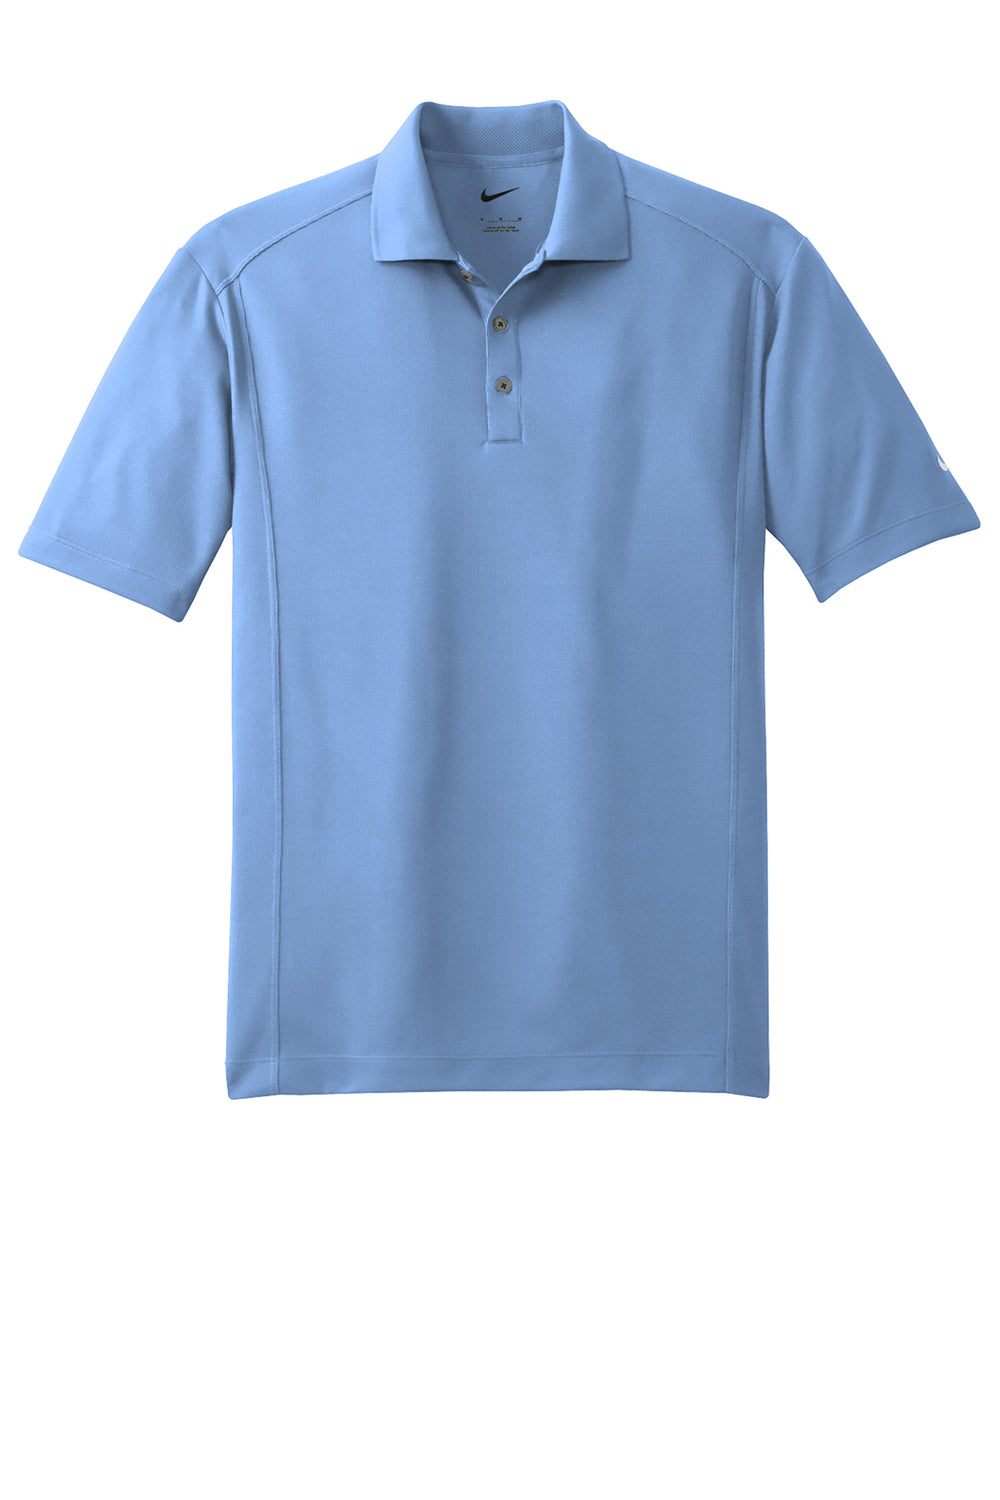 Nike 267020 Mens Classic Dri-Fit Moisture Wicking Short Sleeve Polo Shirt Light Blue Flat Front